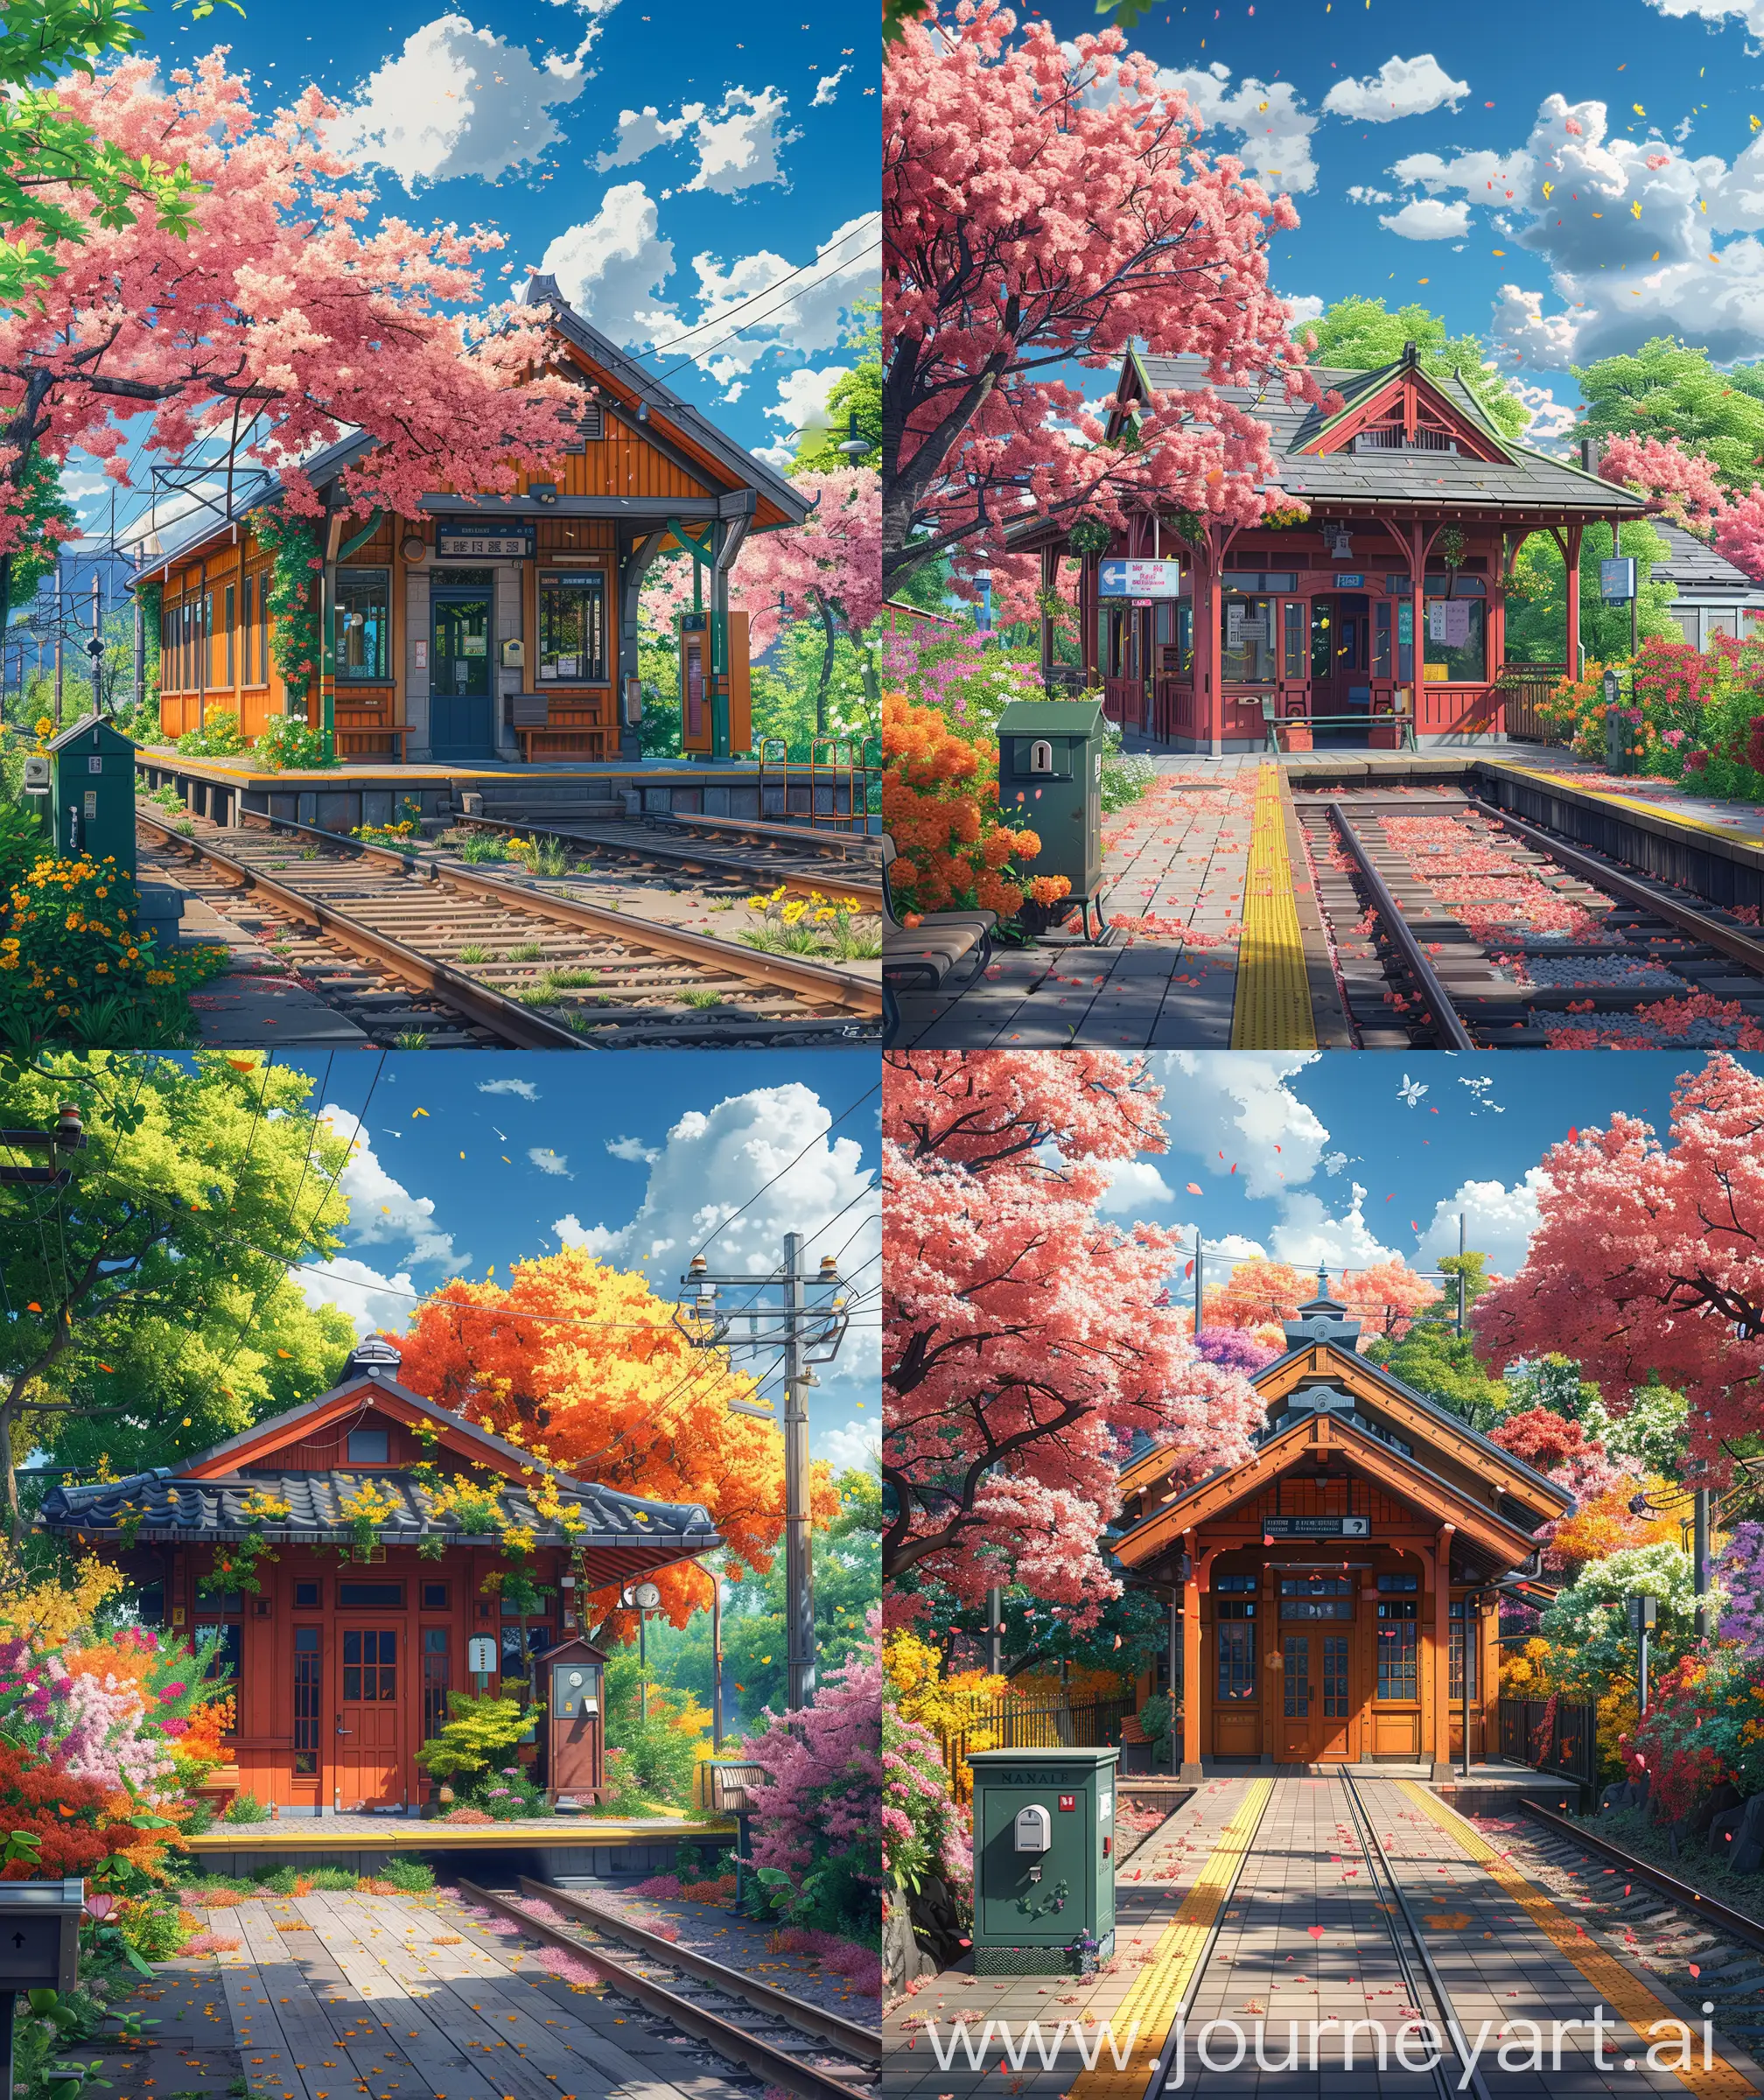 Colorful-Anime-Style-Montreal-Suburban-Rail-Station-Illustration